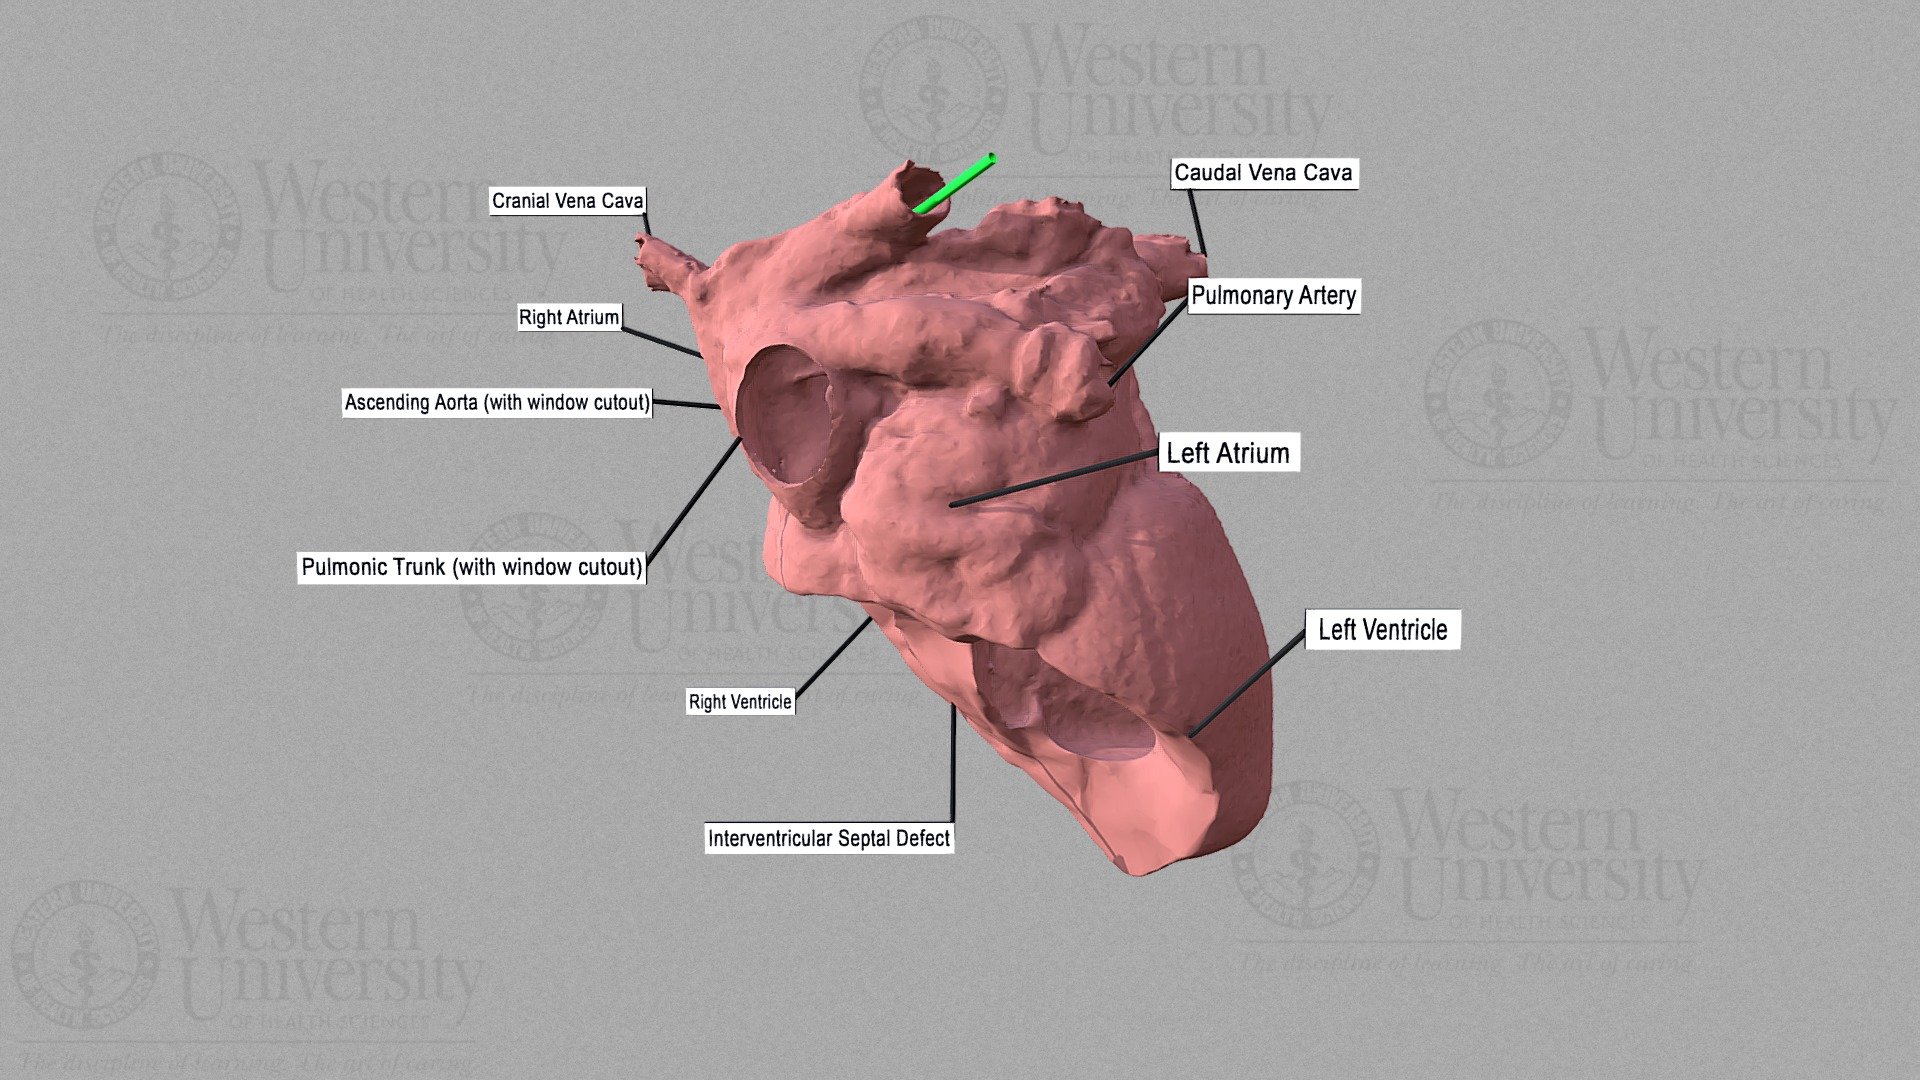 Tin Man PBL Case - Heart 3D Reconstruction